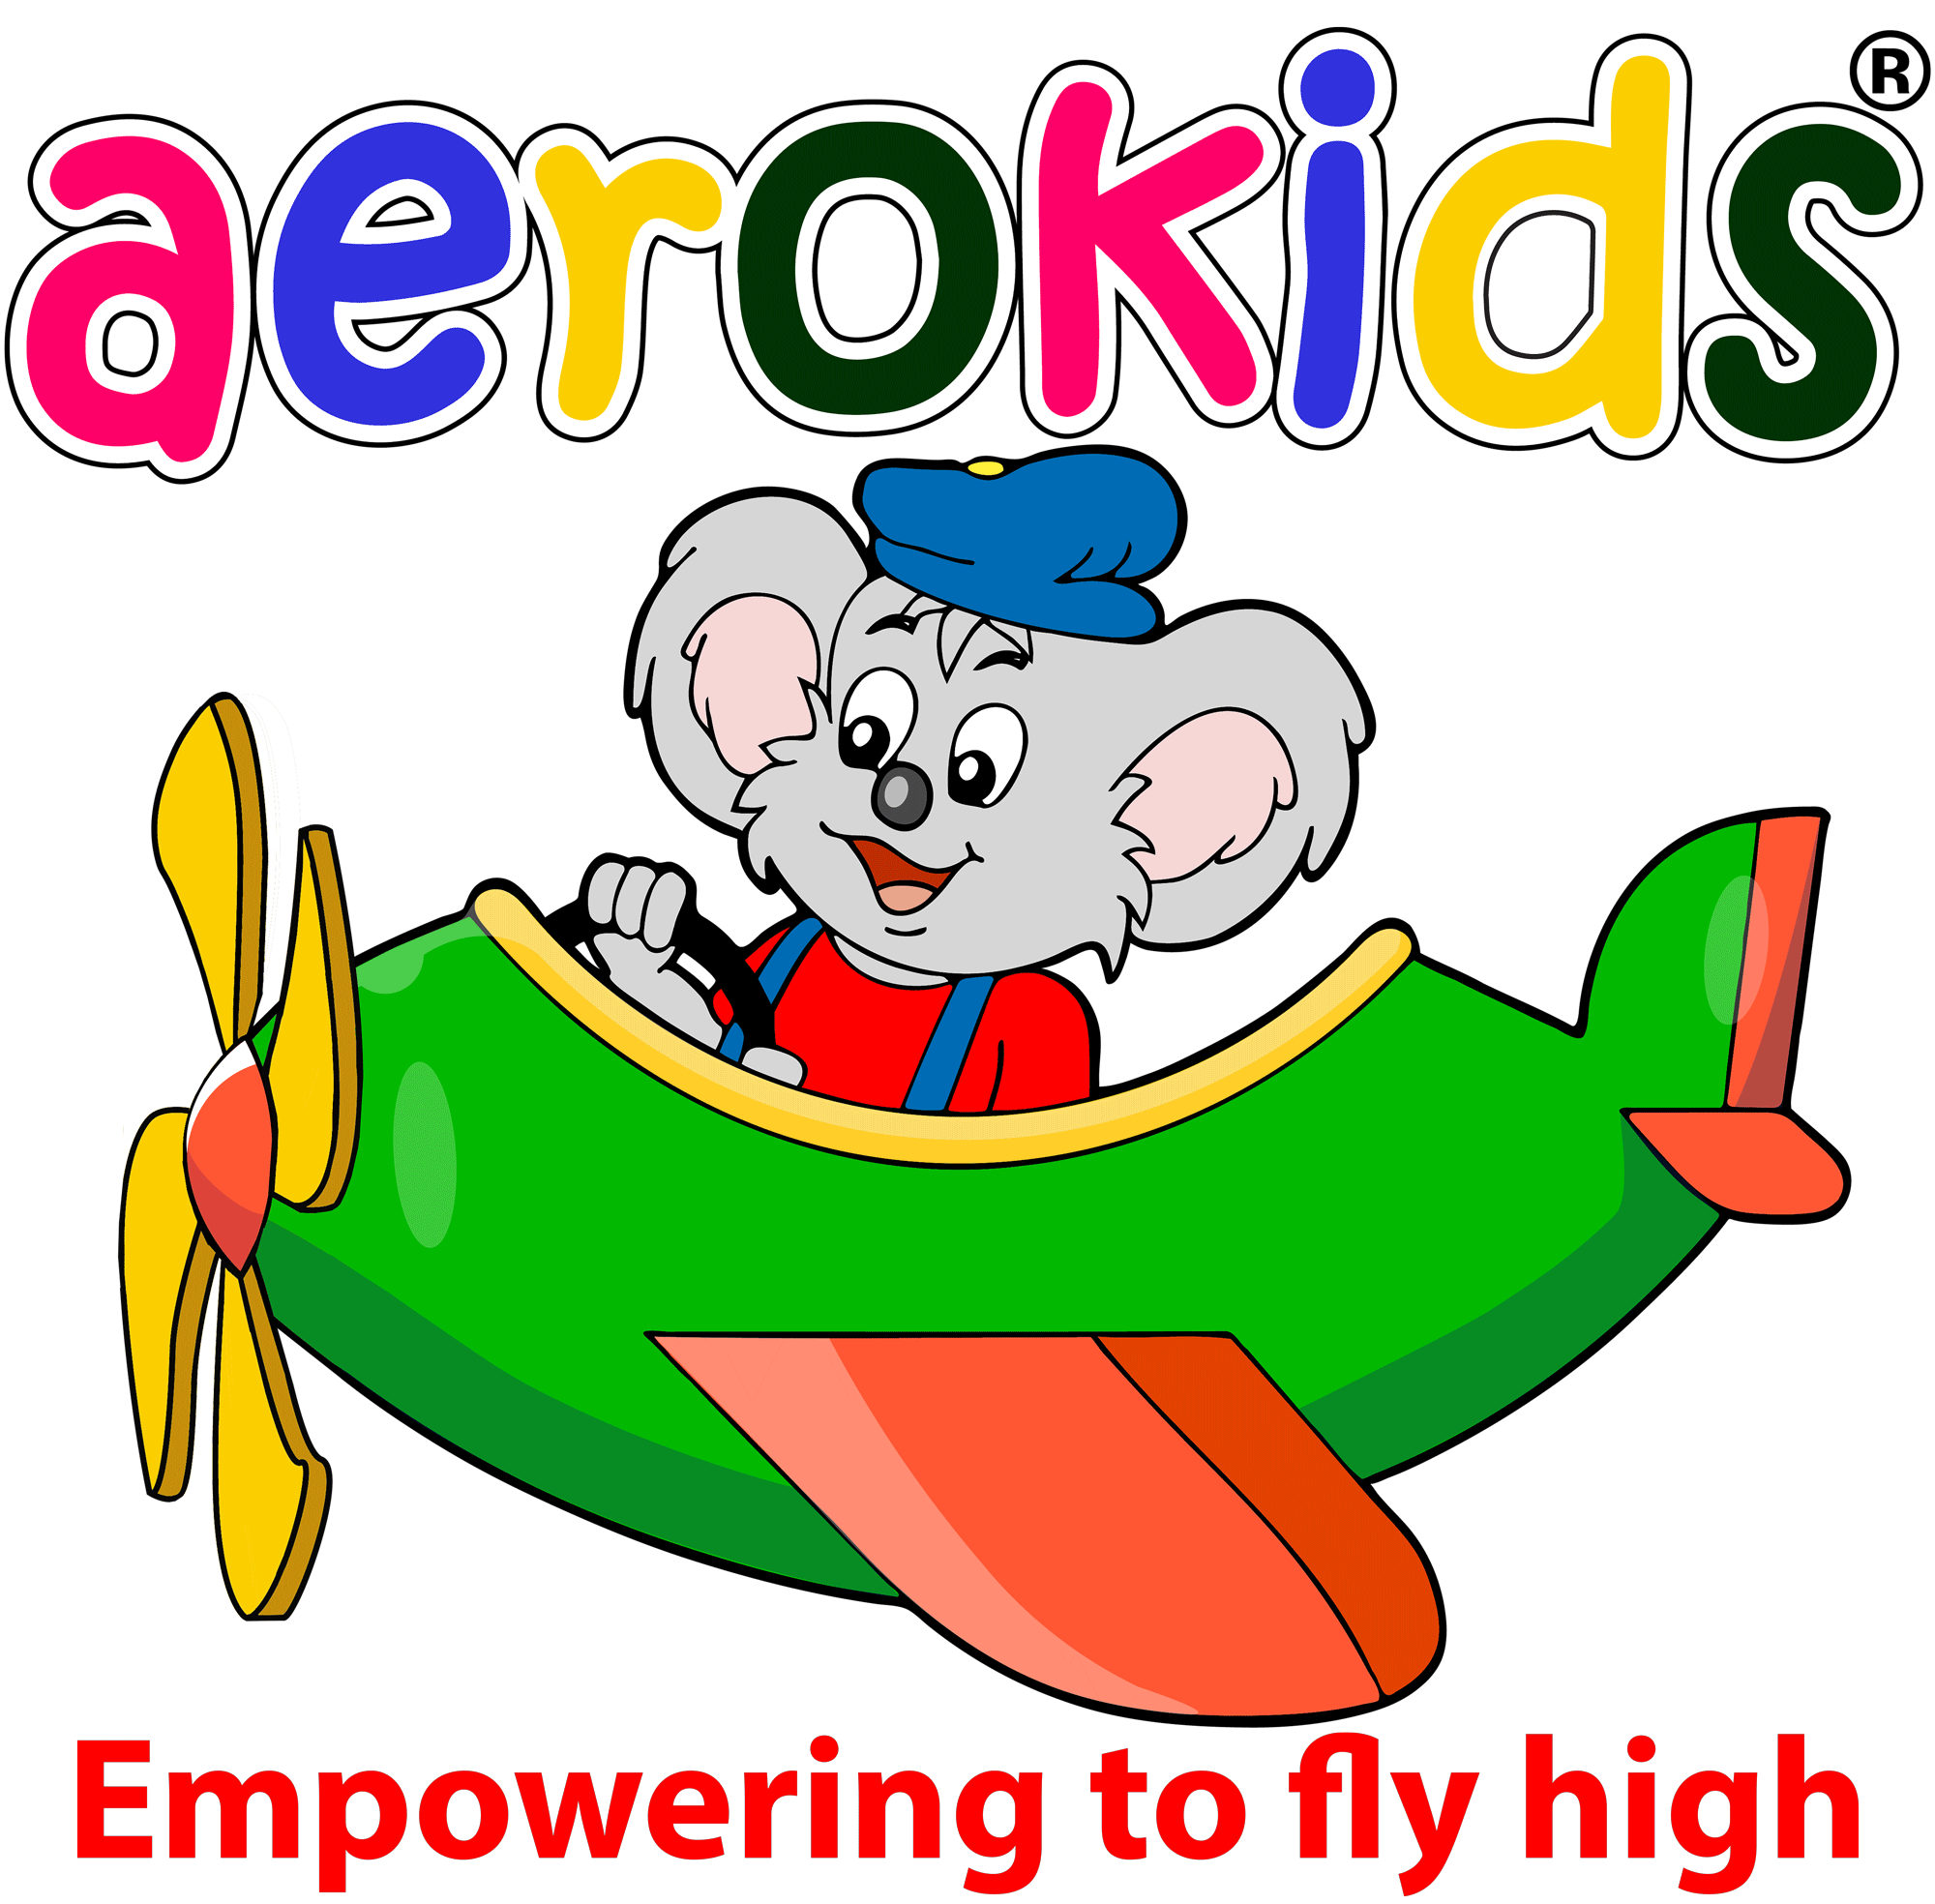  aerokids animated logo